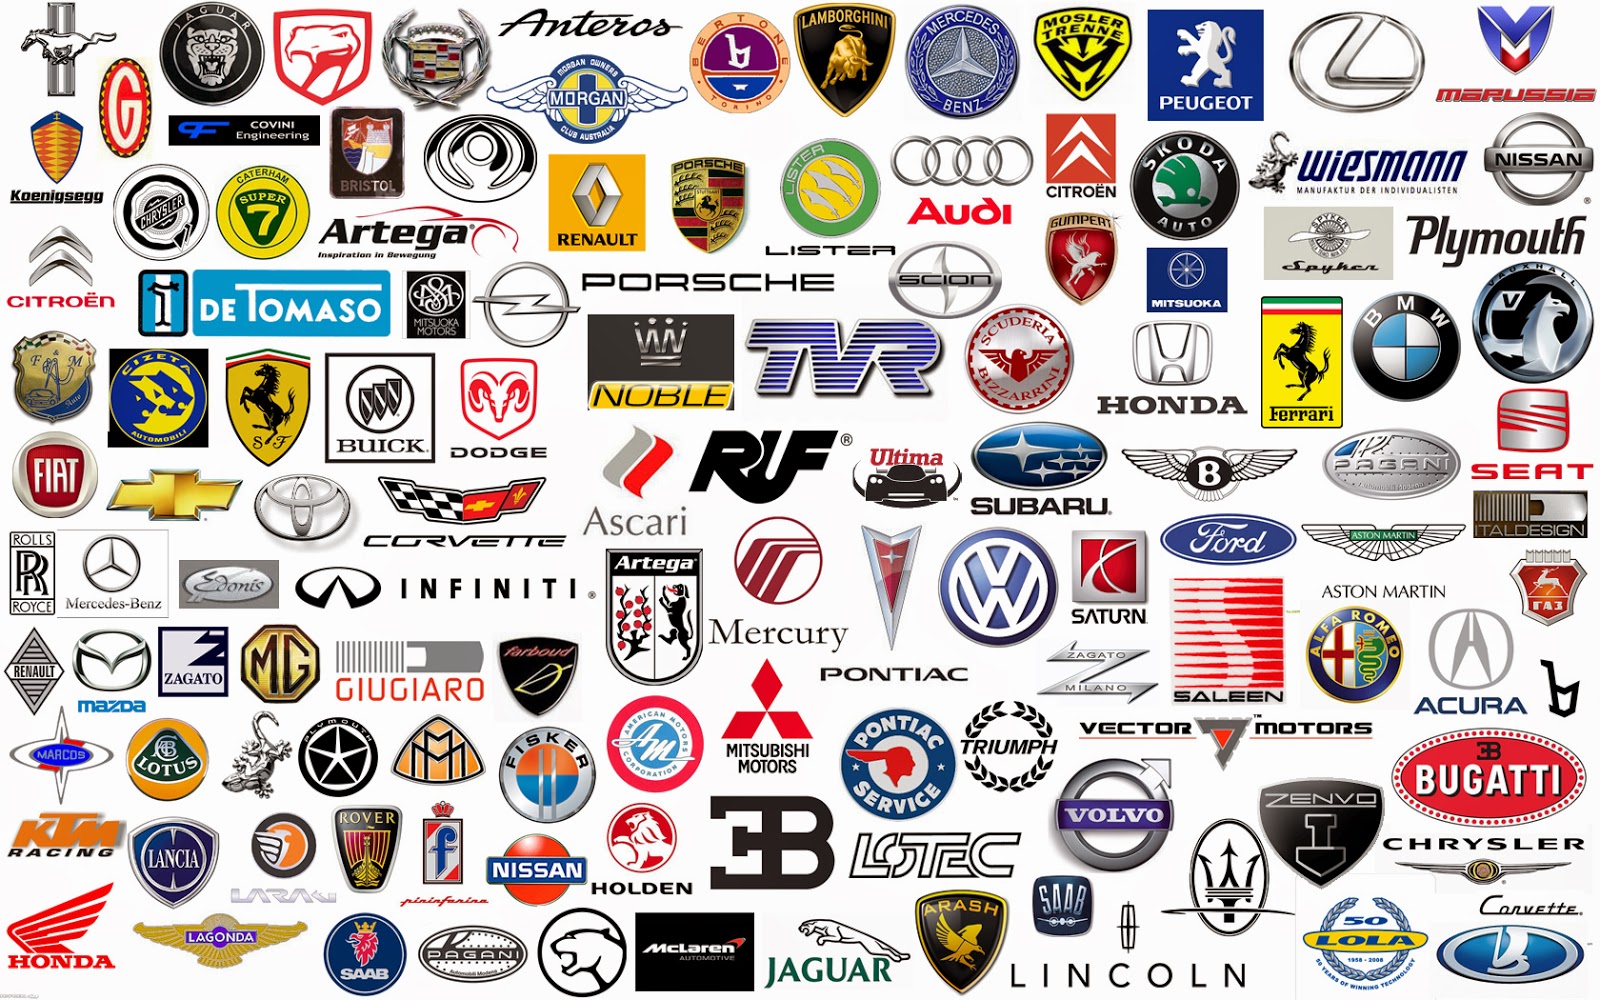 Car Logos And Names